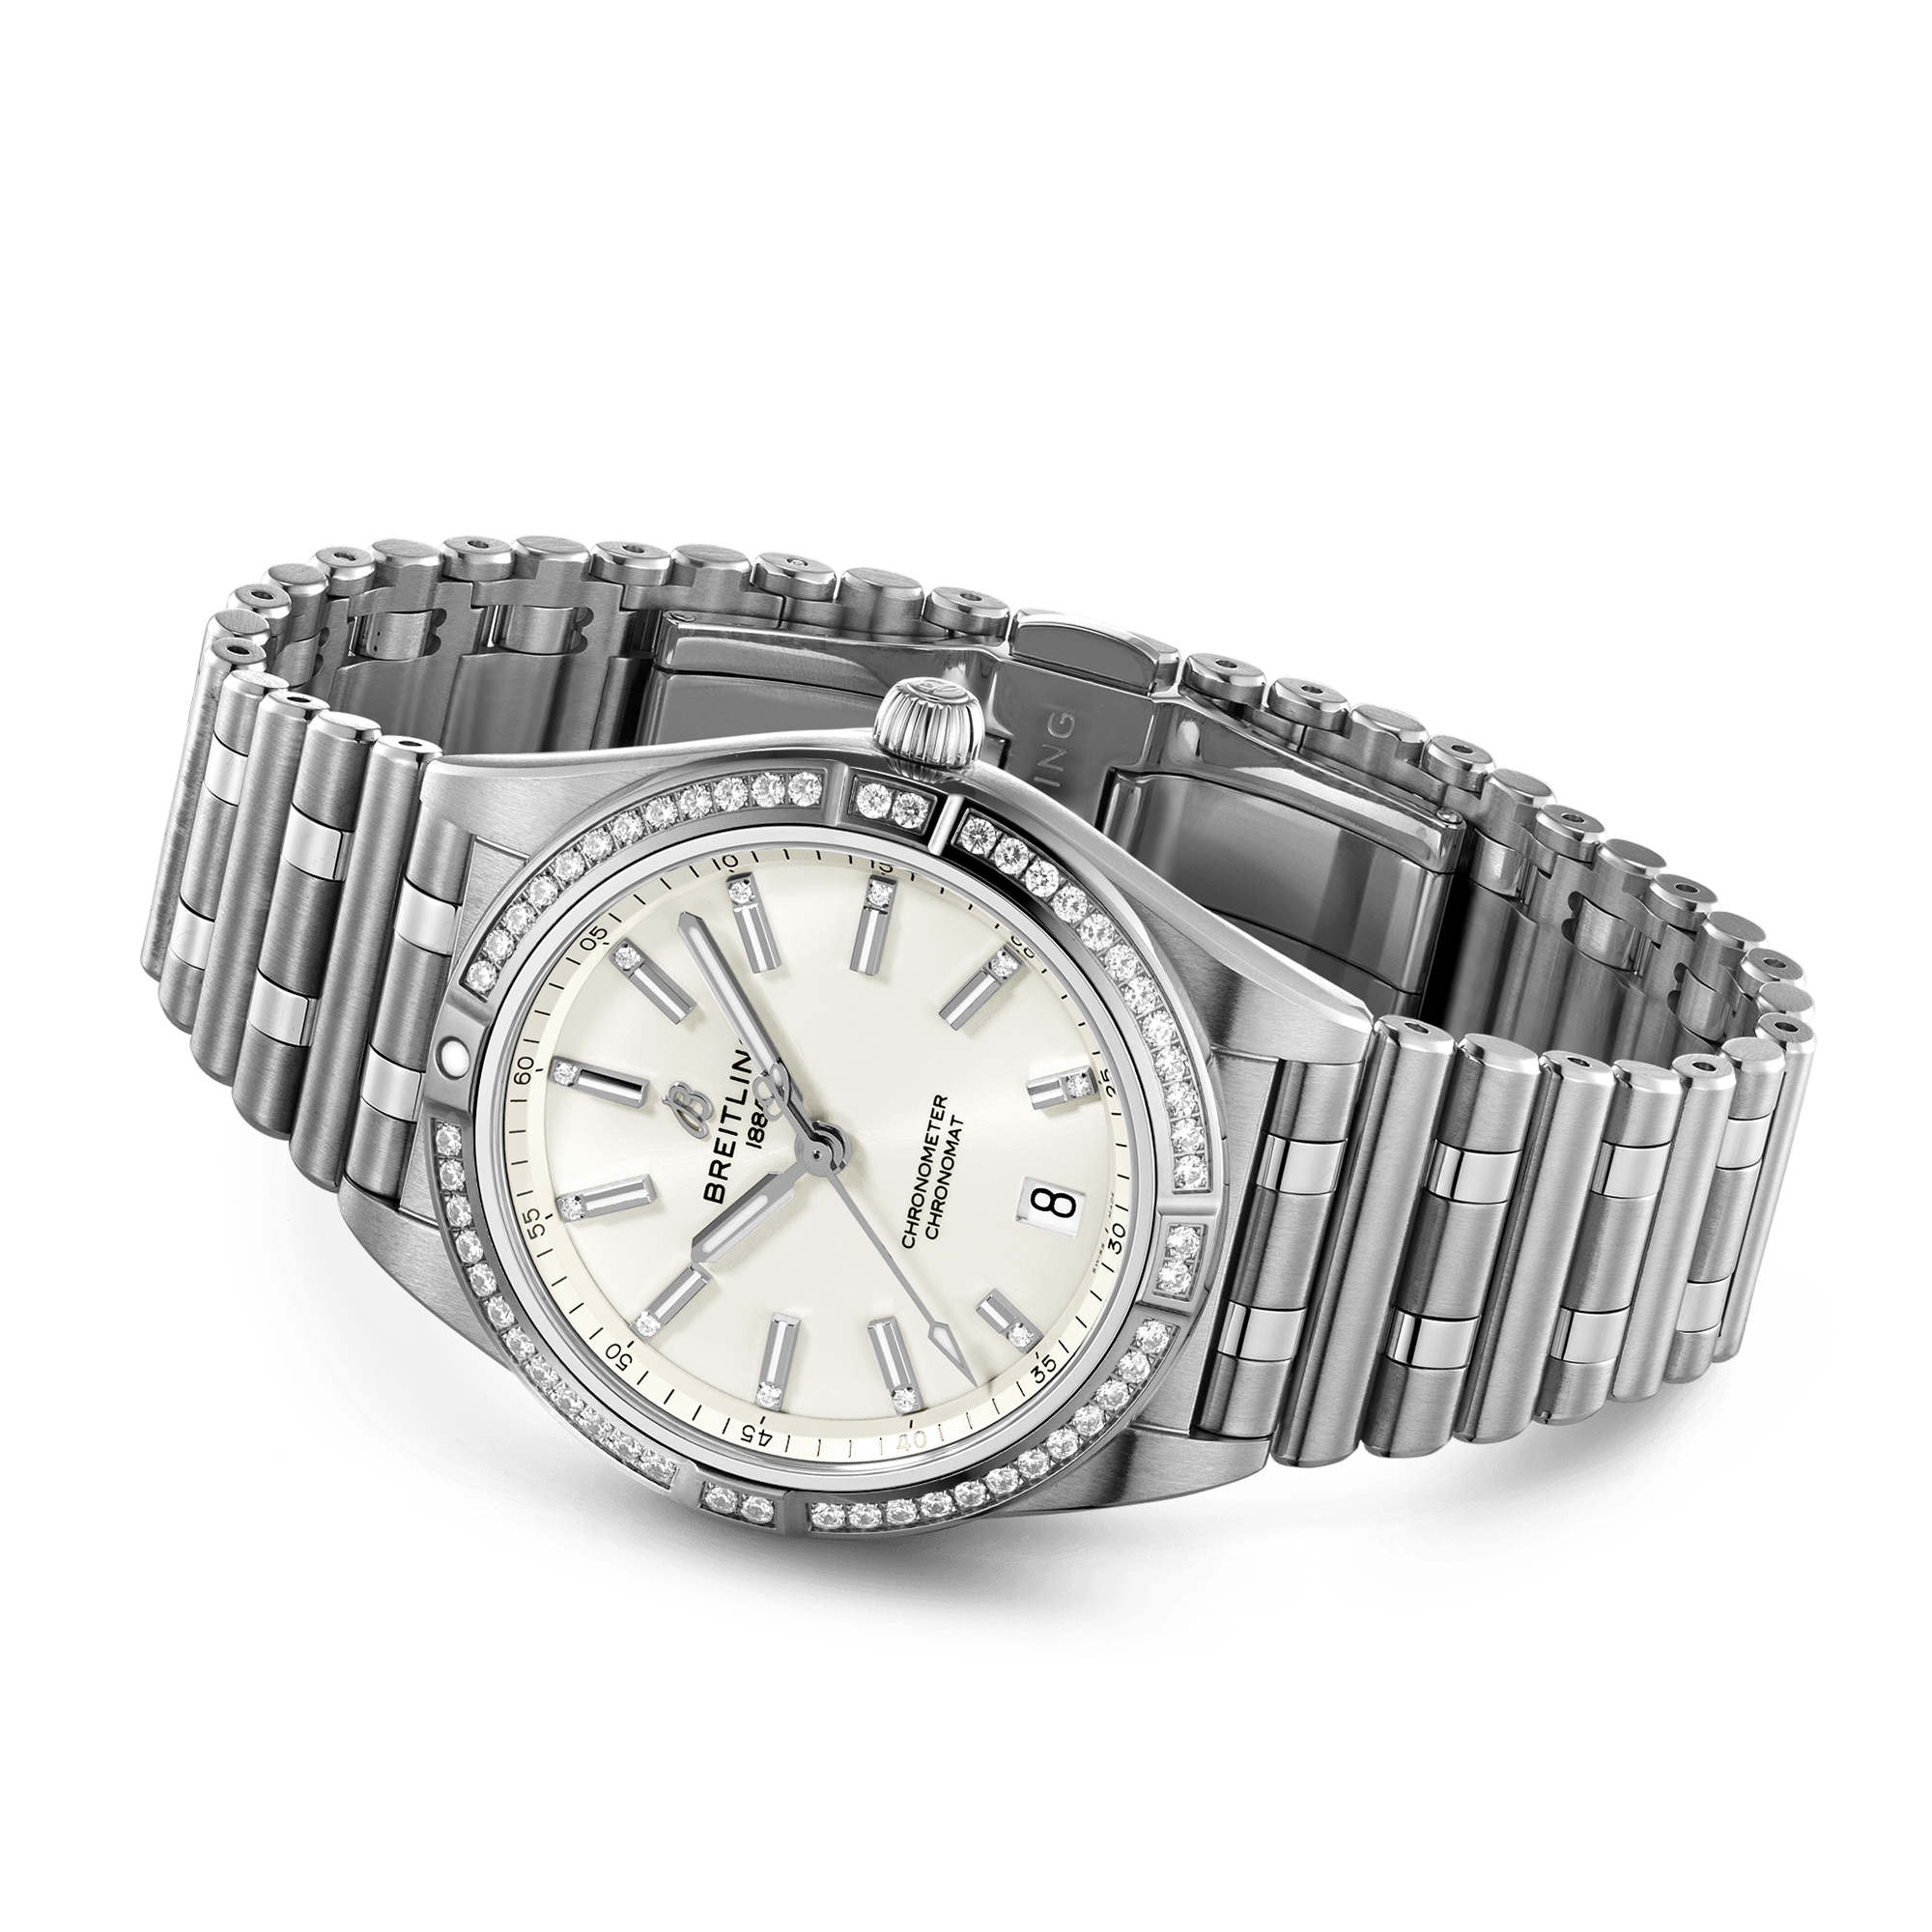 Chronomat 36mm Silver Diamond Dial & Bezel Ladies Bracelet Watch